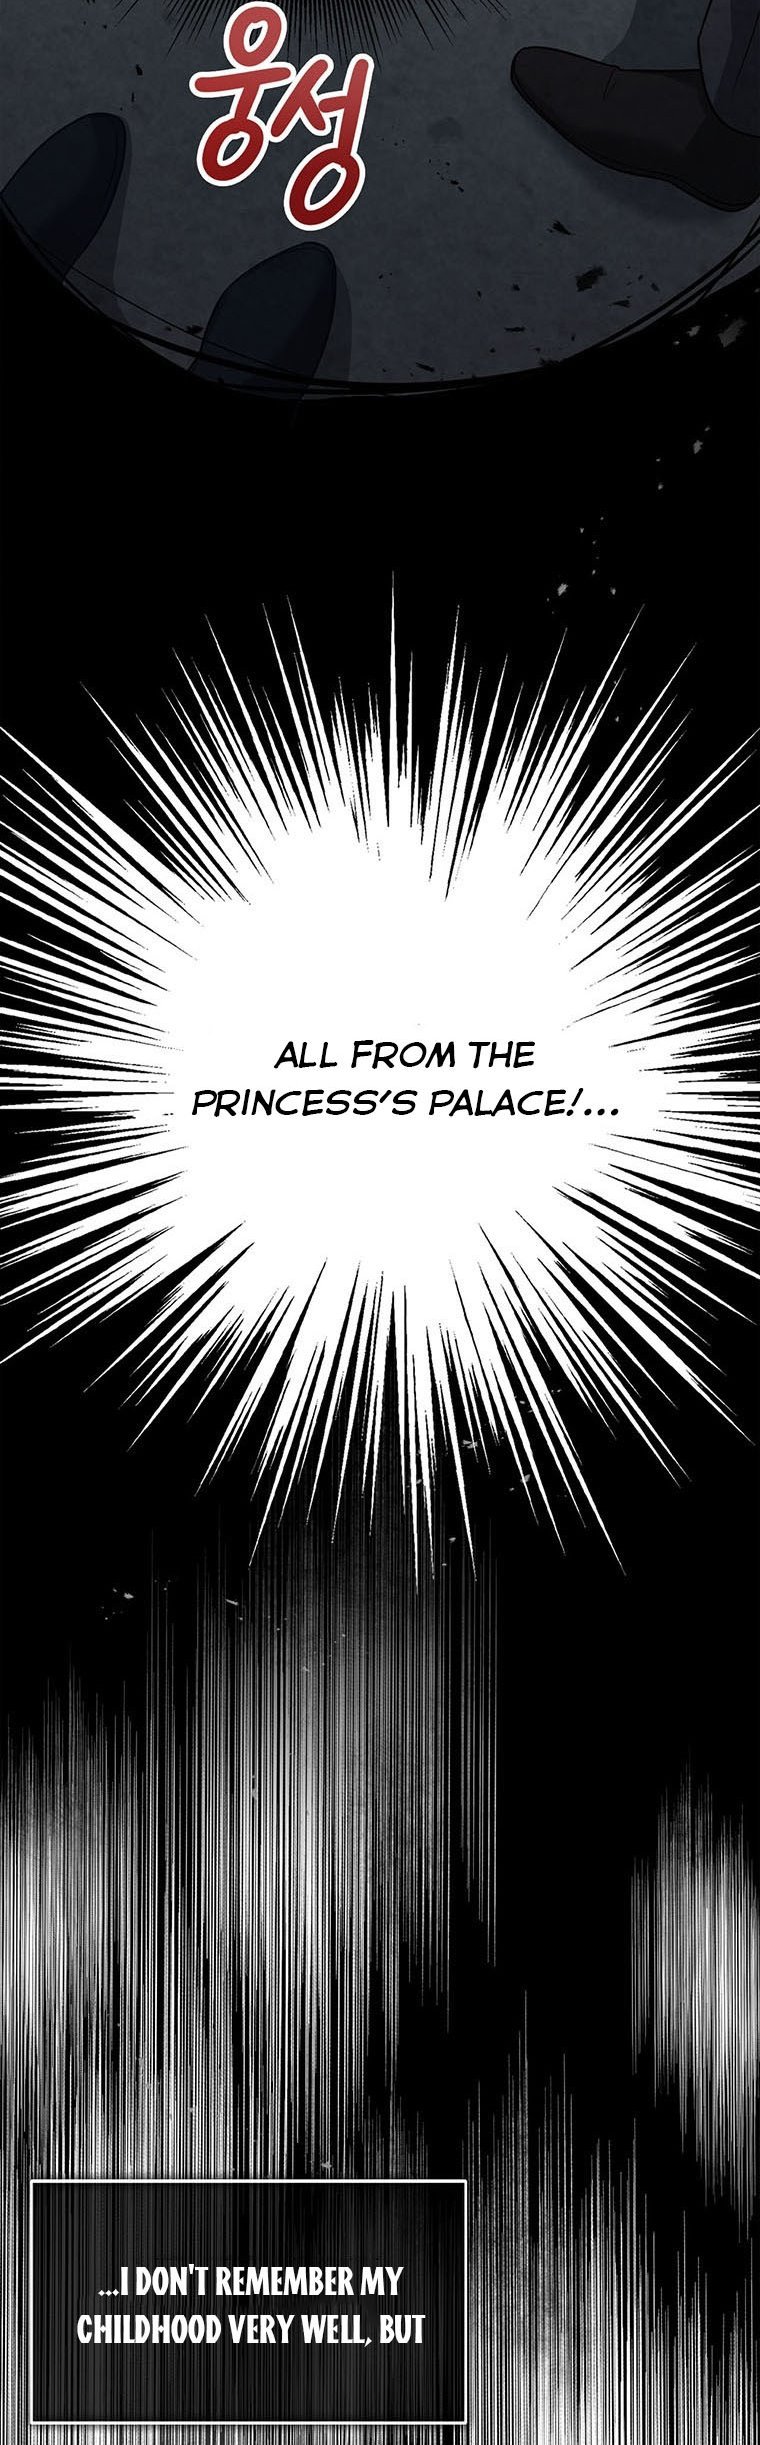 Baby Princess Through the Status Window chapter 7